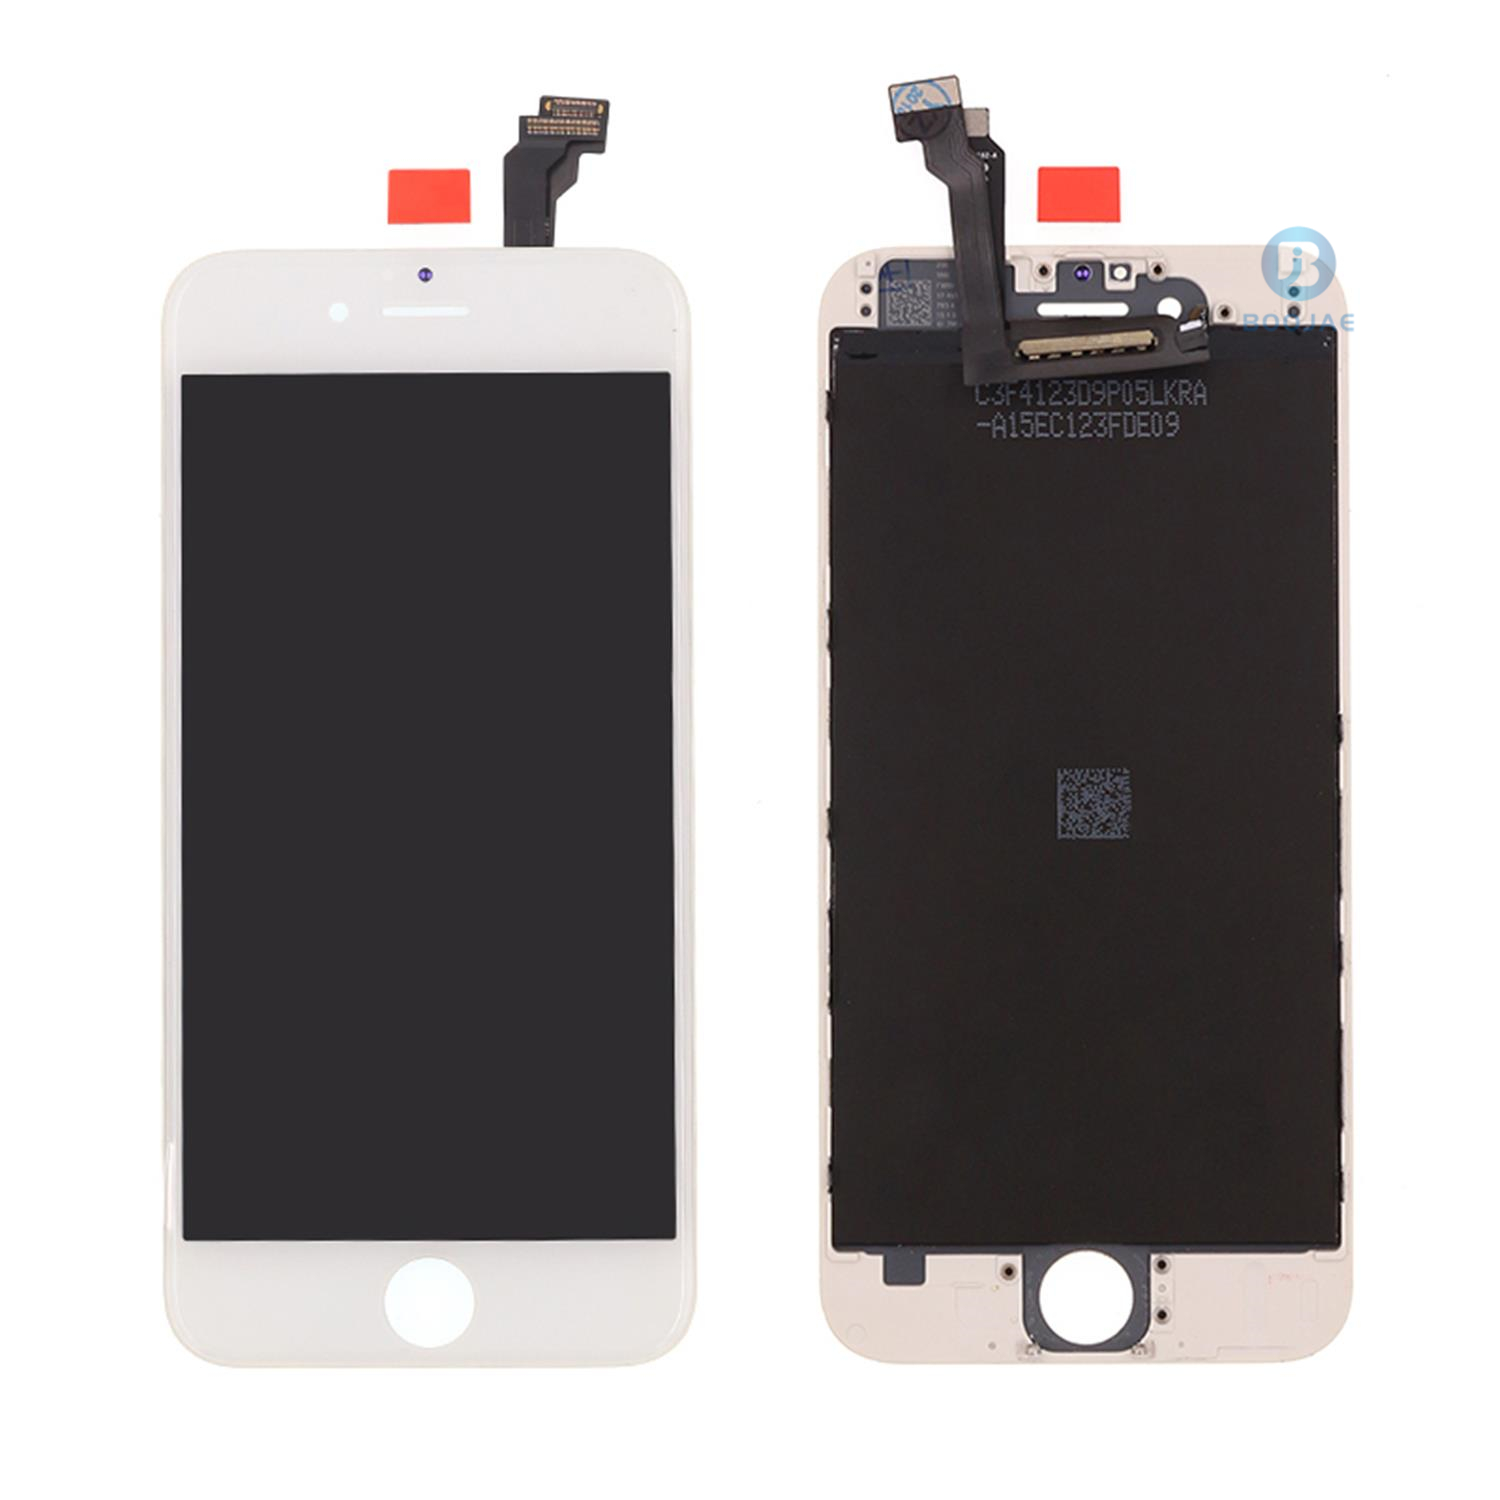 iPhone 6 LCD Display | Wholesale iPhone Screens | BOOJAE